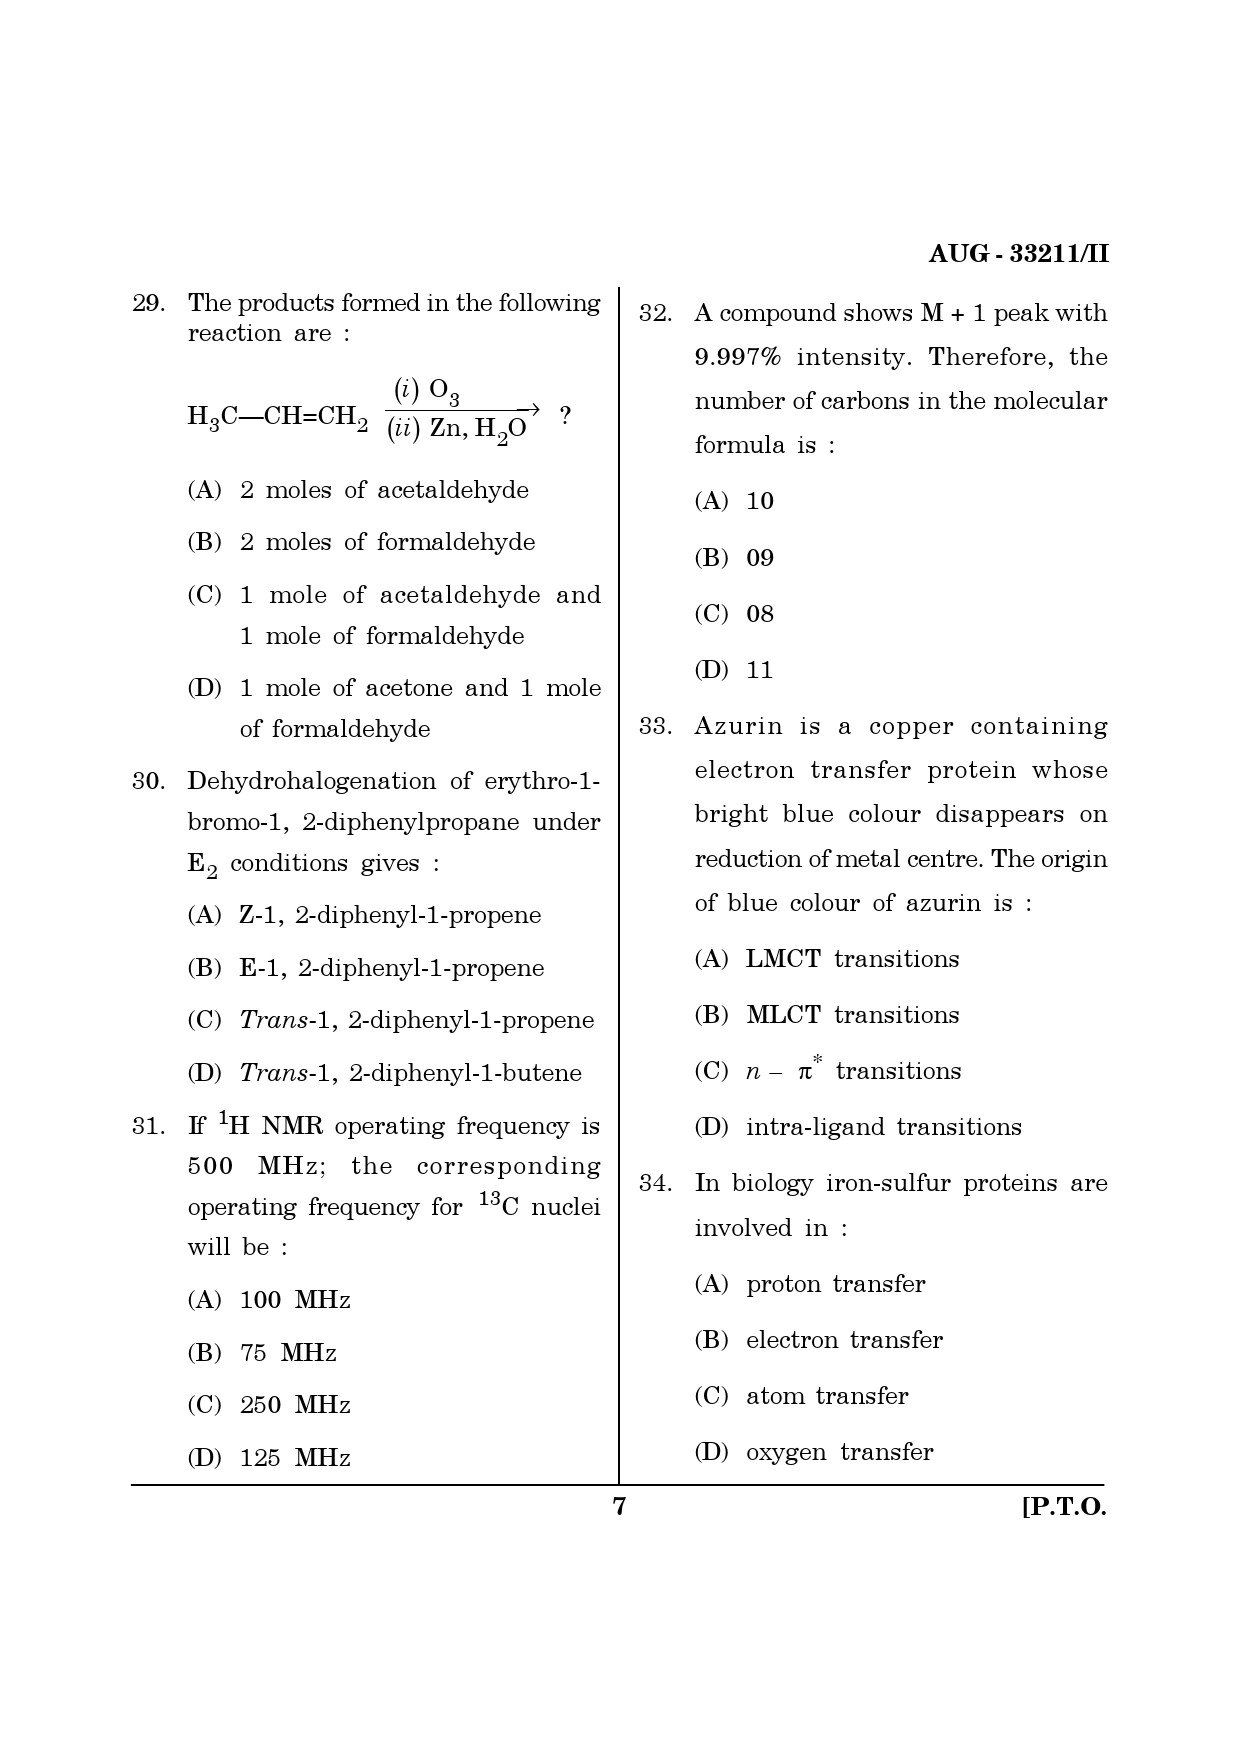 Maharashtra SET Chemical Sciences Question Paper II August 2011 7